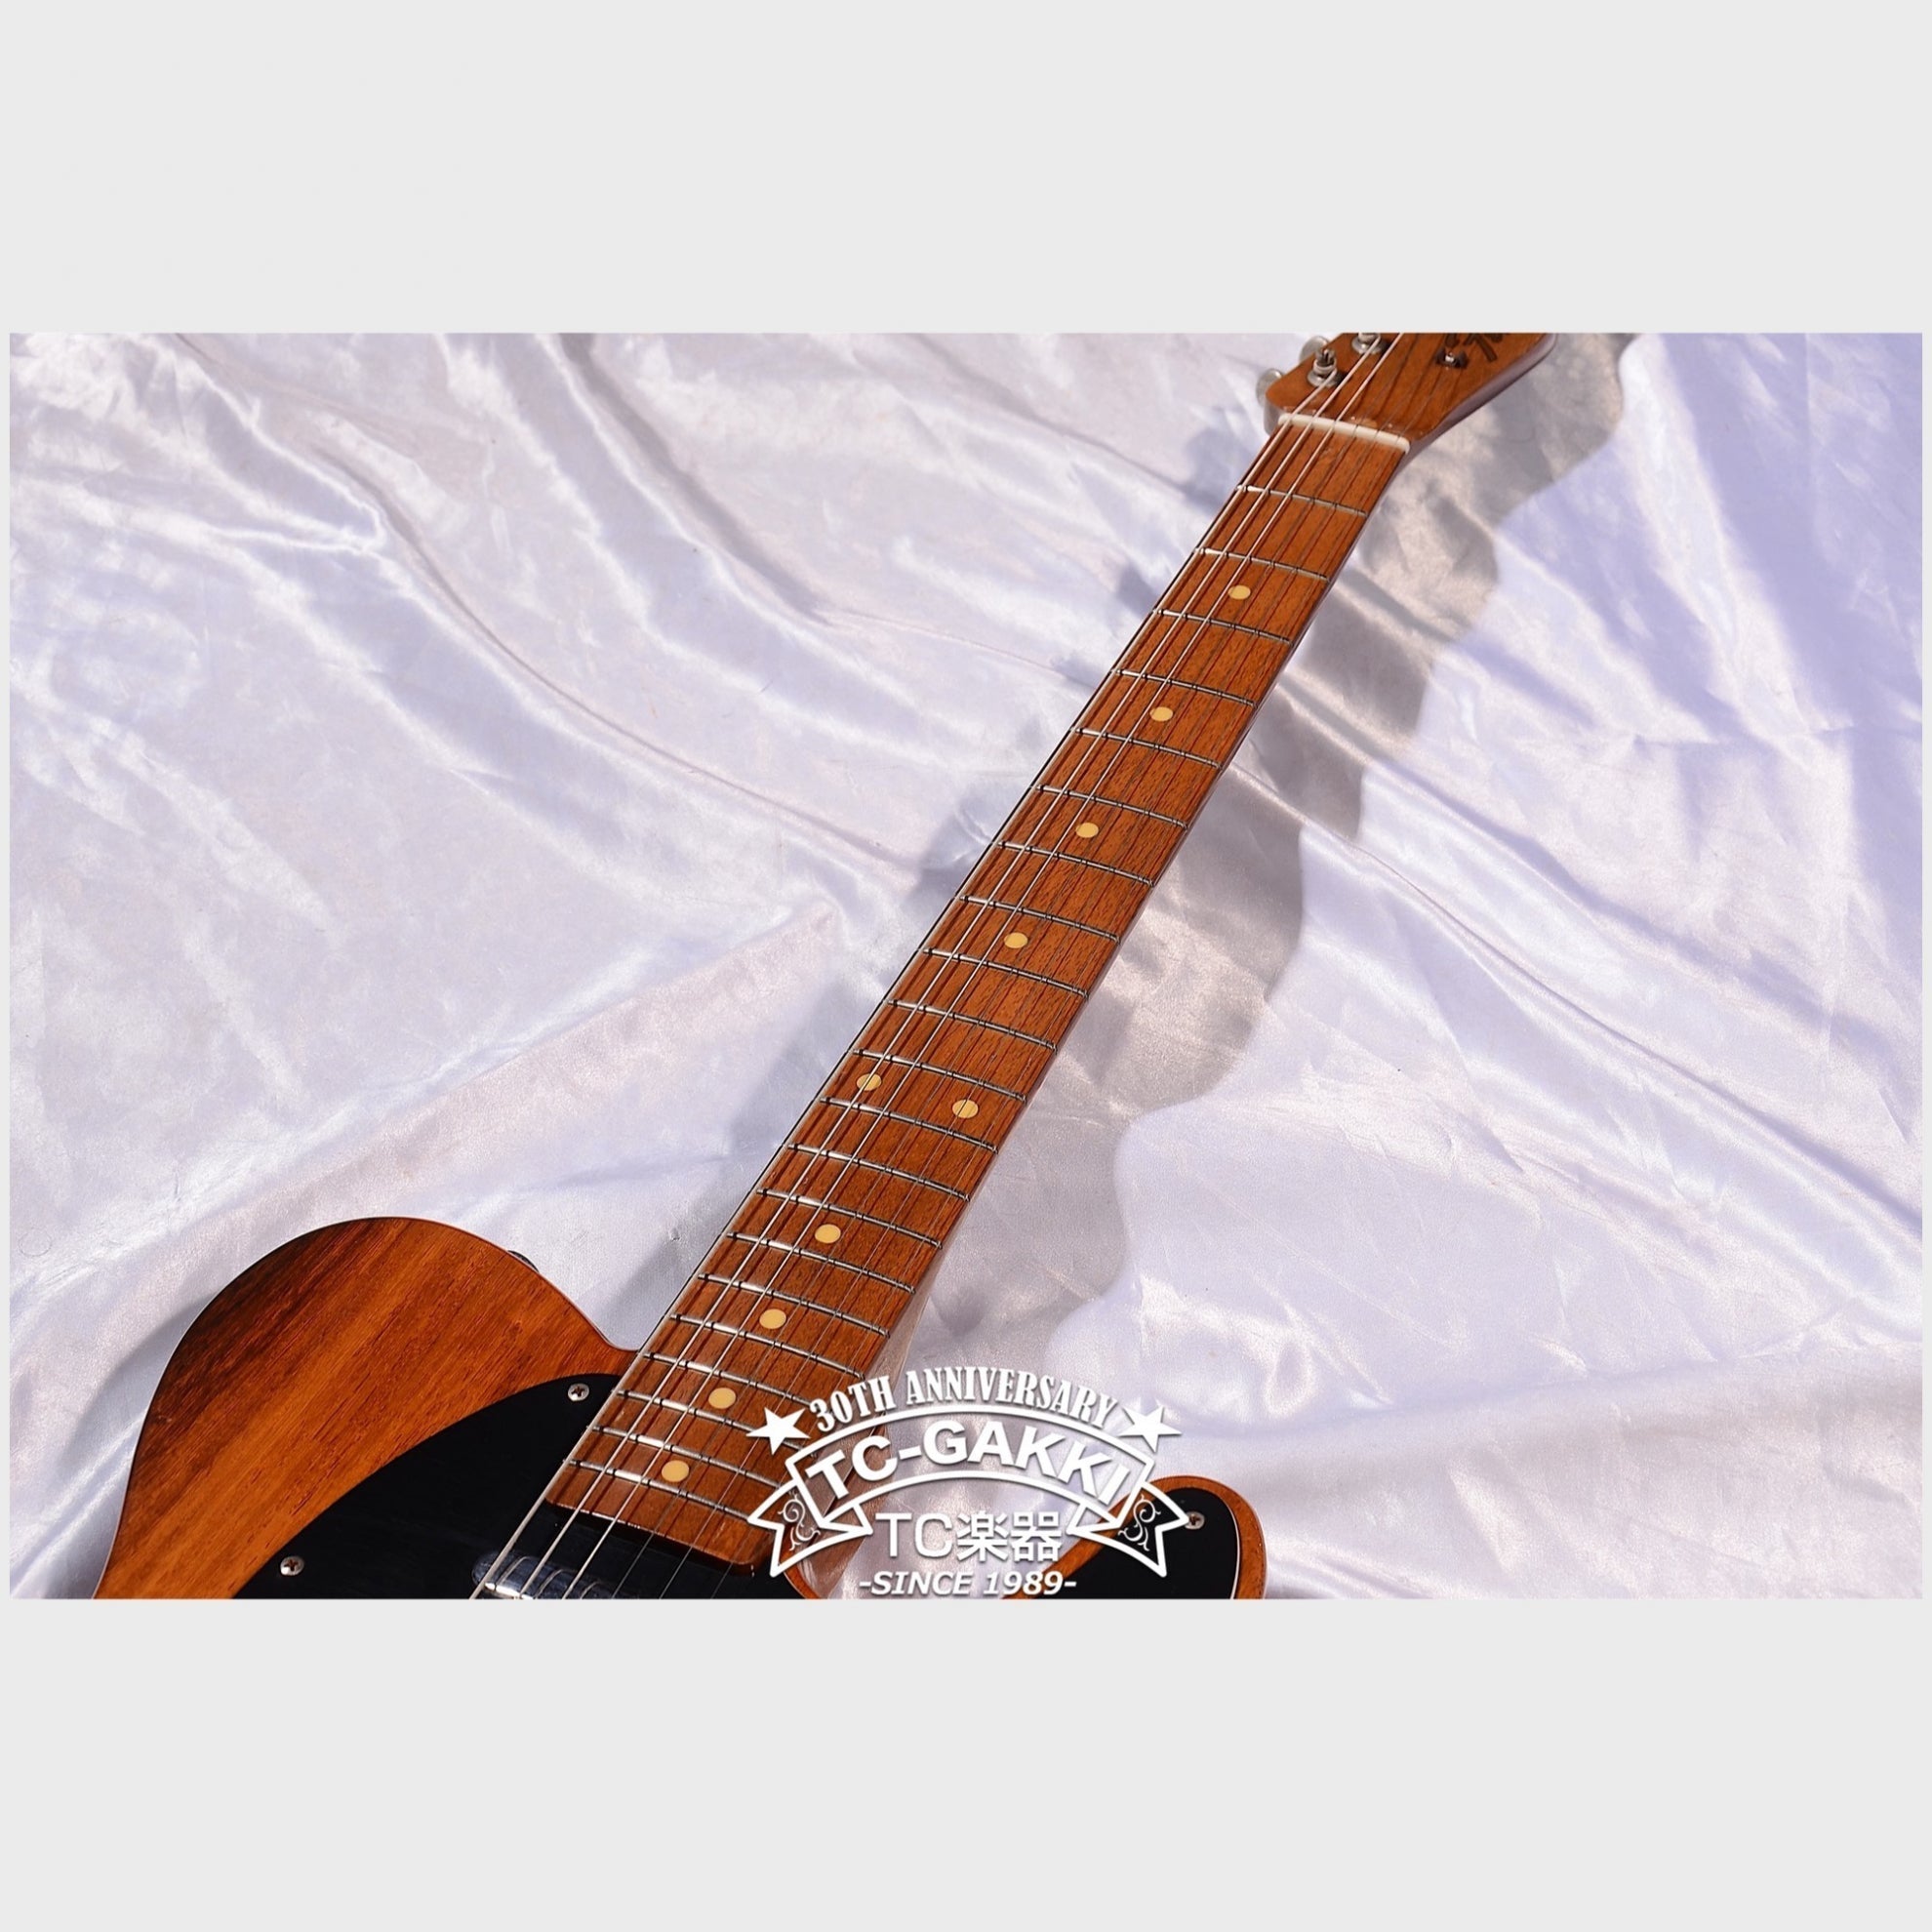 Fender Japan: TL69 “All Rose Telecaster”